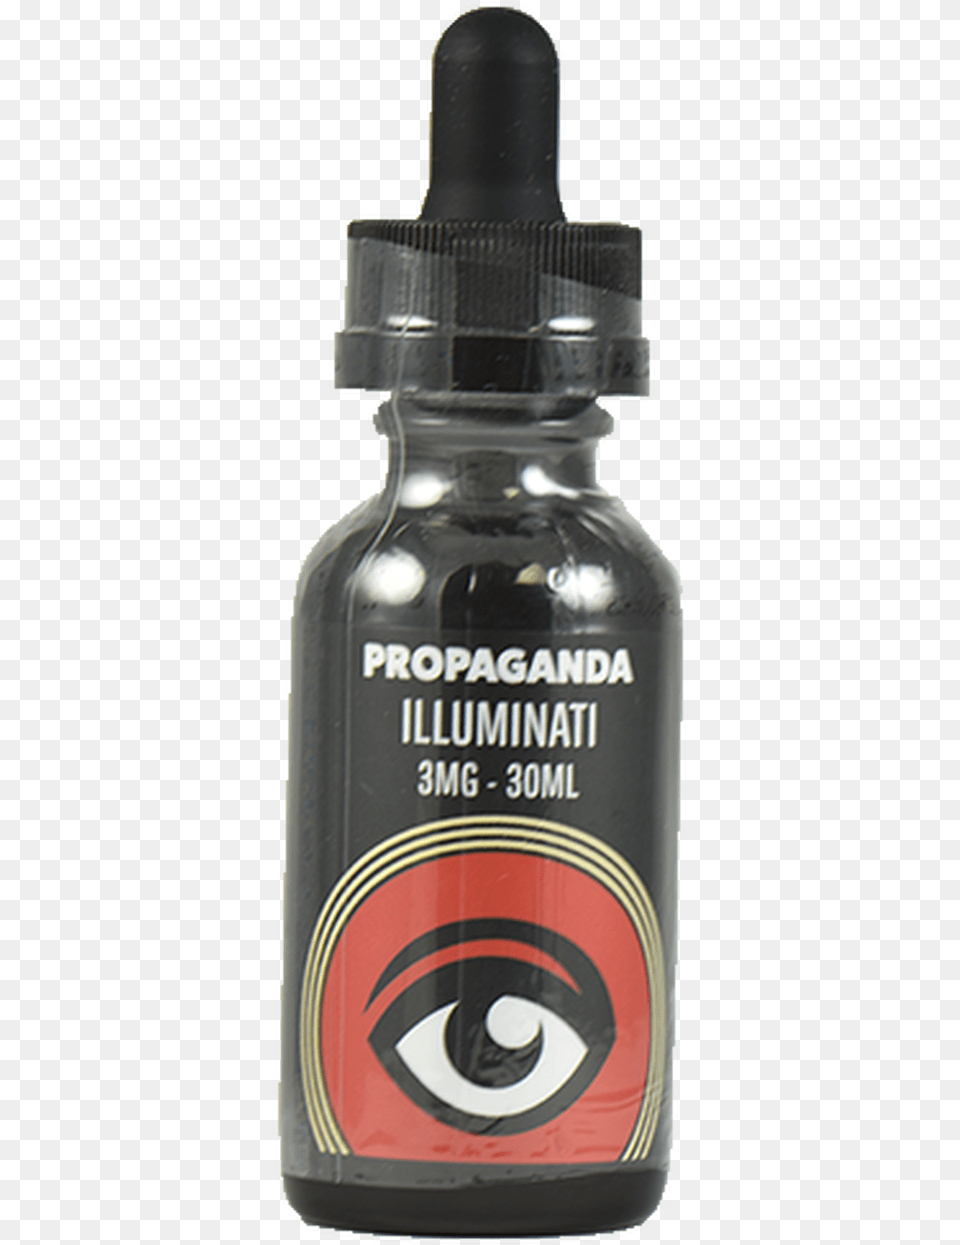 Propaganda Illuminati E Liquid, Bottle, Ink Bottle, Cosmetics, Perfume Png Image